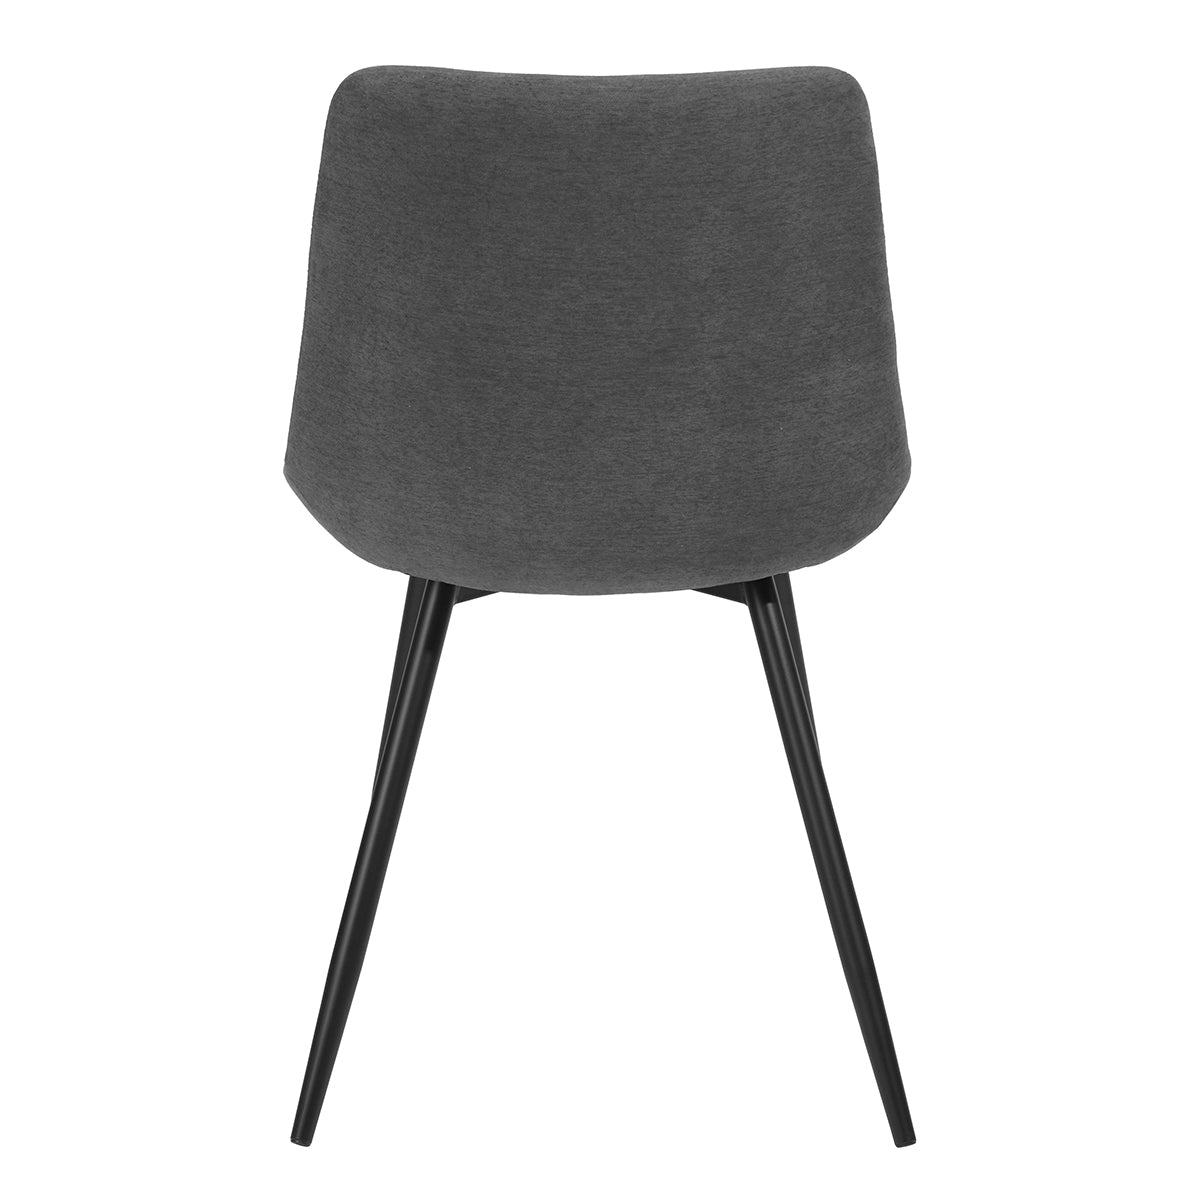 Set of 2 beige fabric dining chairs - CASEMIRO 2PCS (SET OF 2)